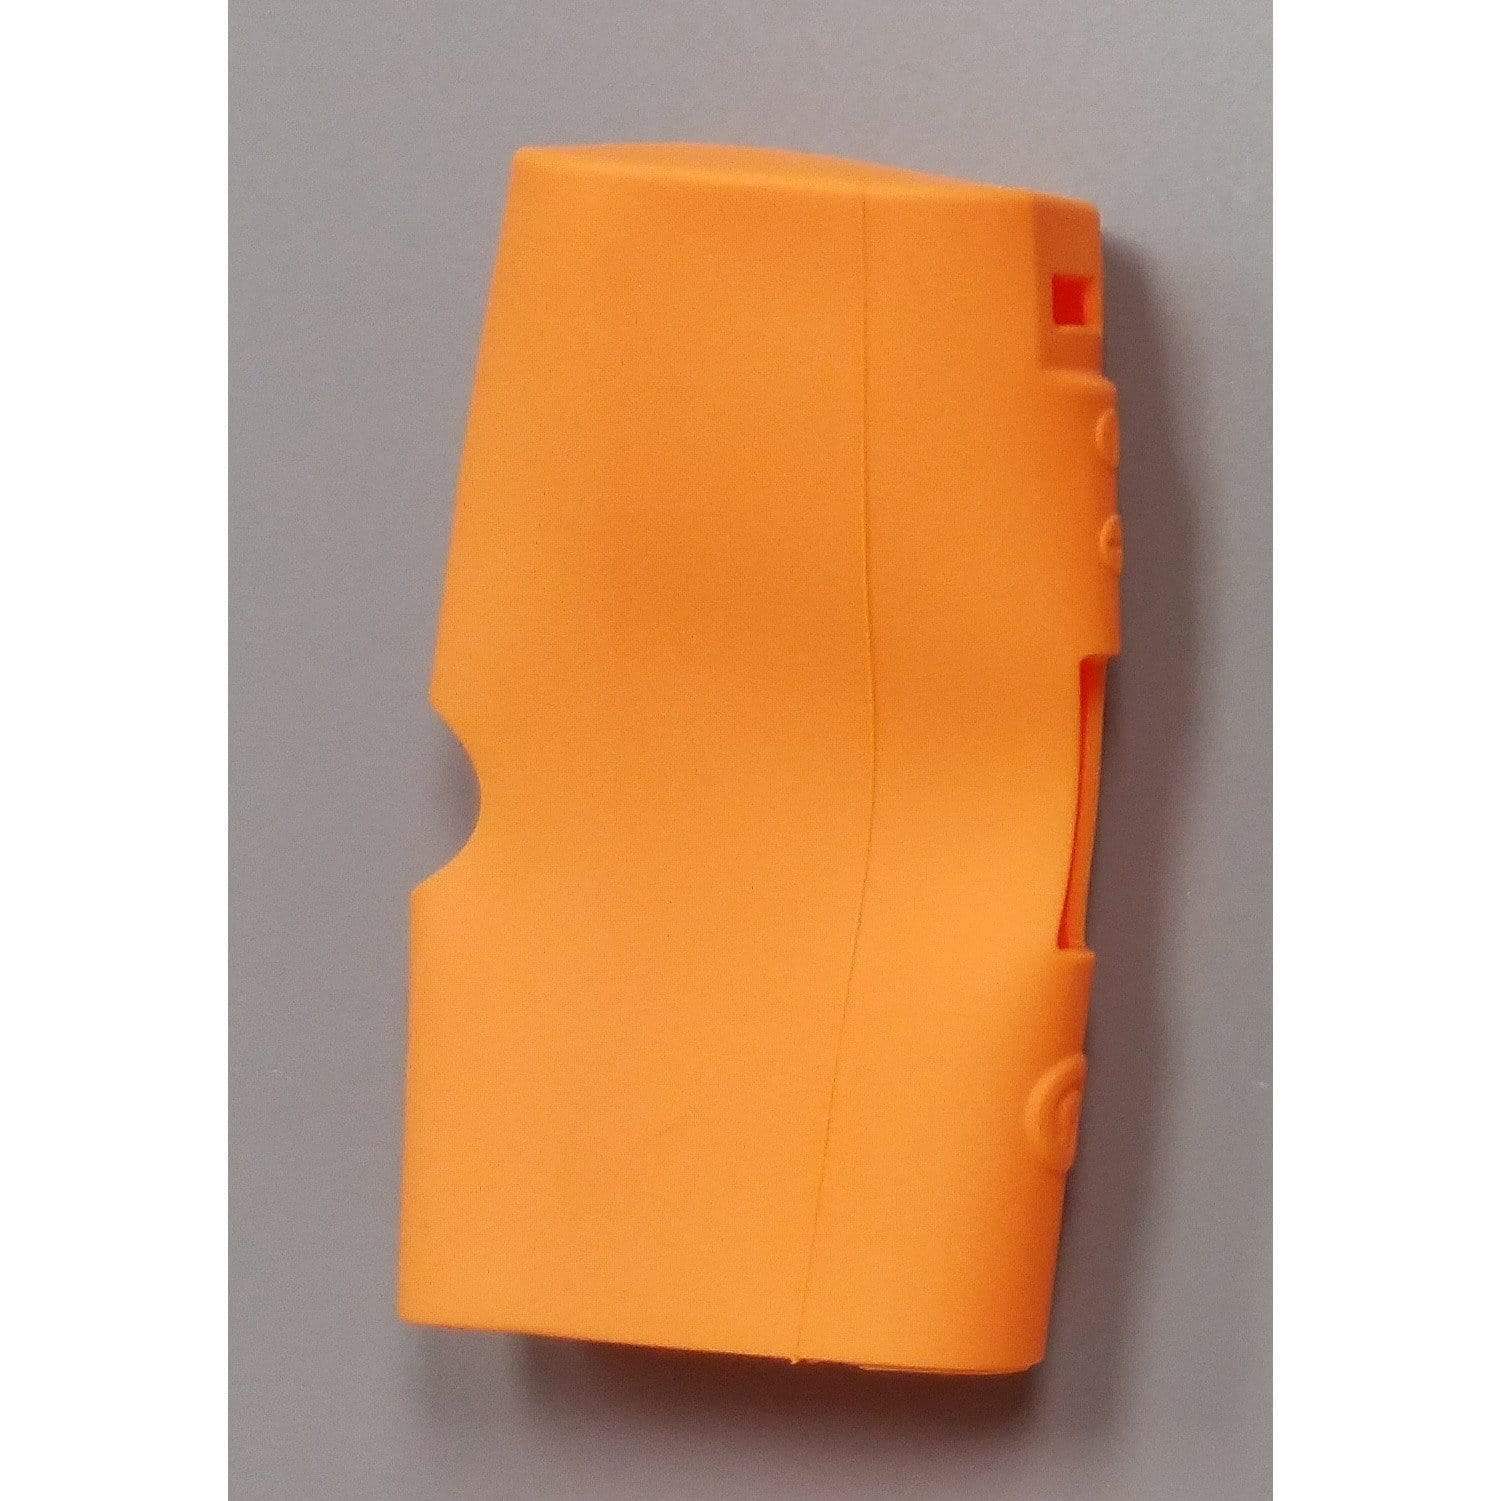 Silicone Sleeve Case for KBOX Mini Orange Silicone Cases